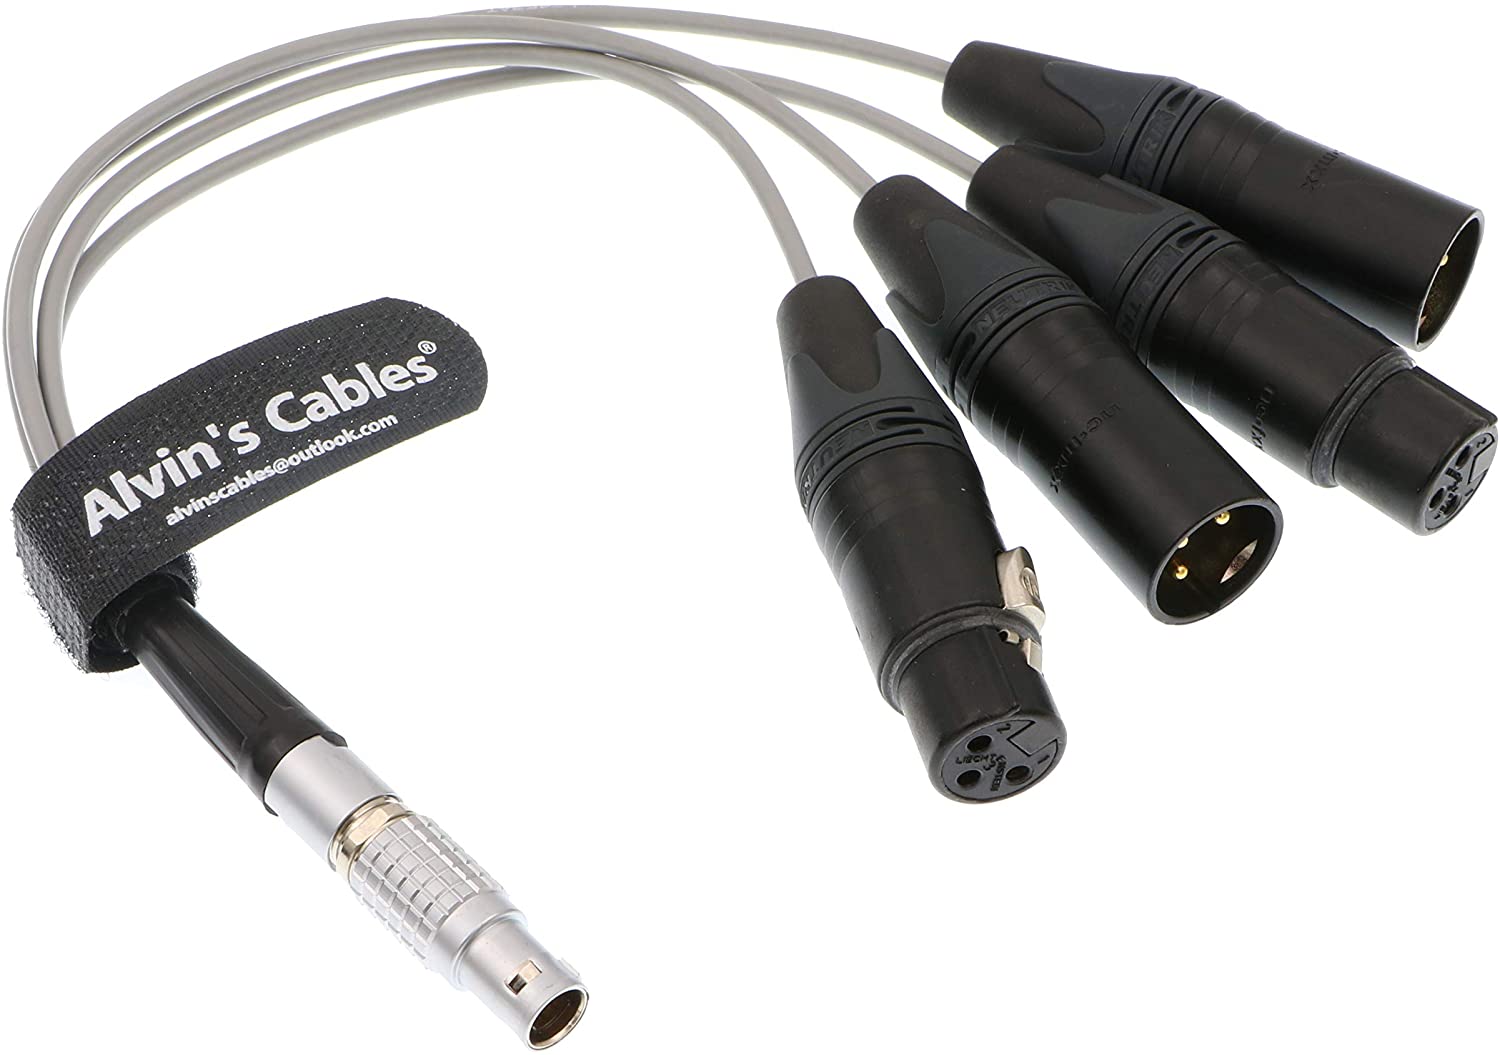 Alvin's Cables Breakout Audio Input Output Kabel für Atomos Shogun Monitor Recorder 10 Pin Stecker auf 4 XLR 3 Pin